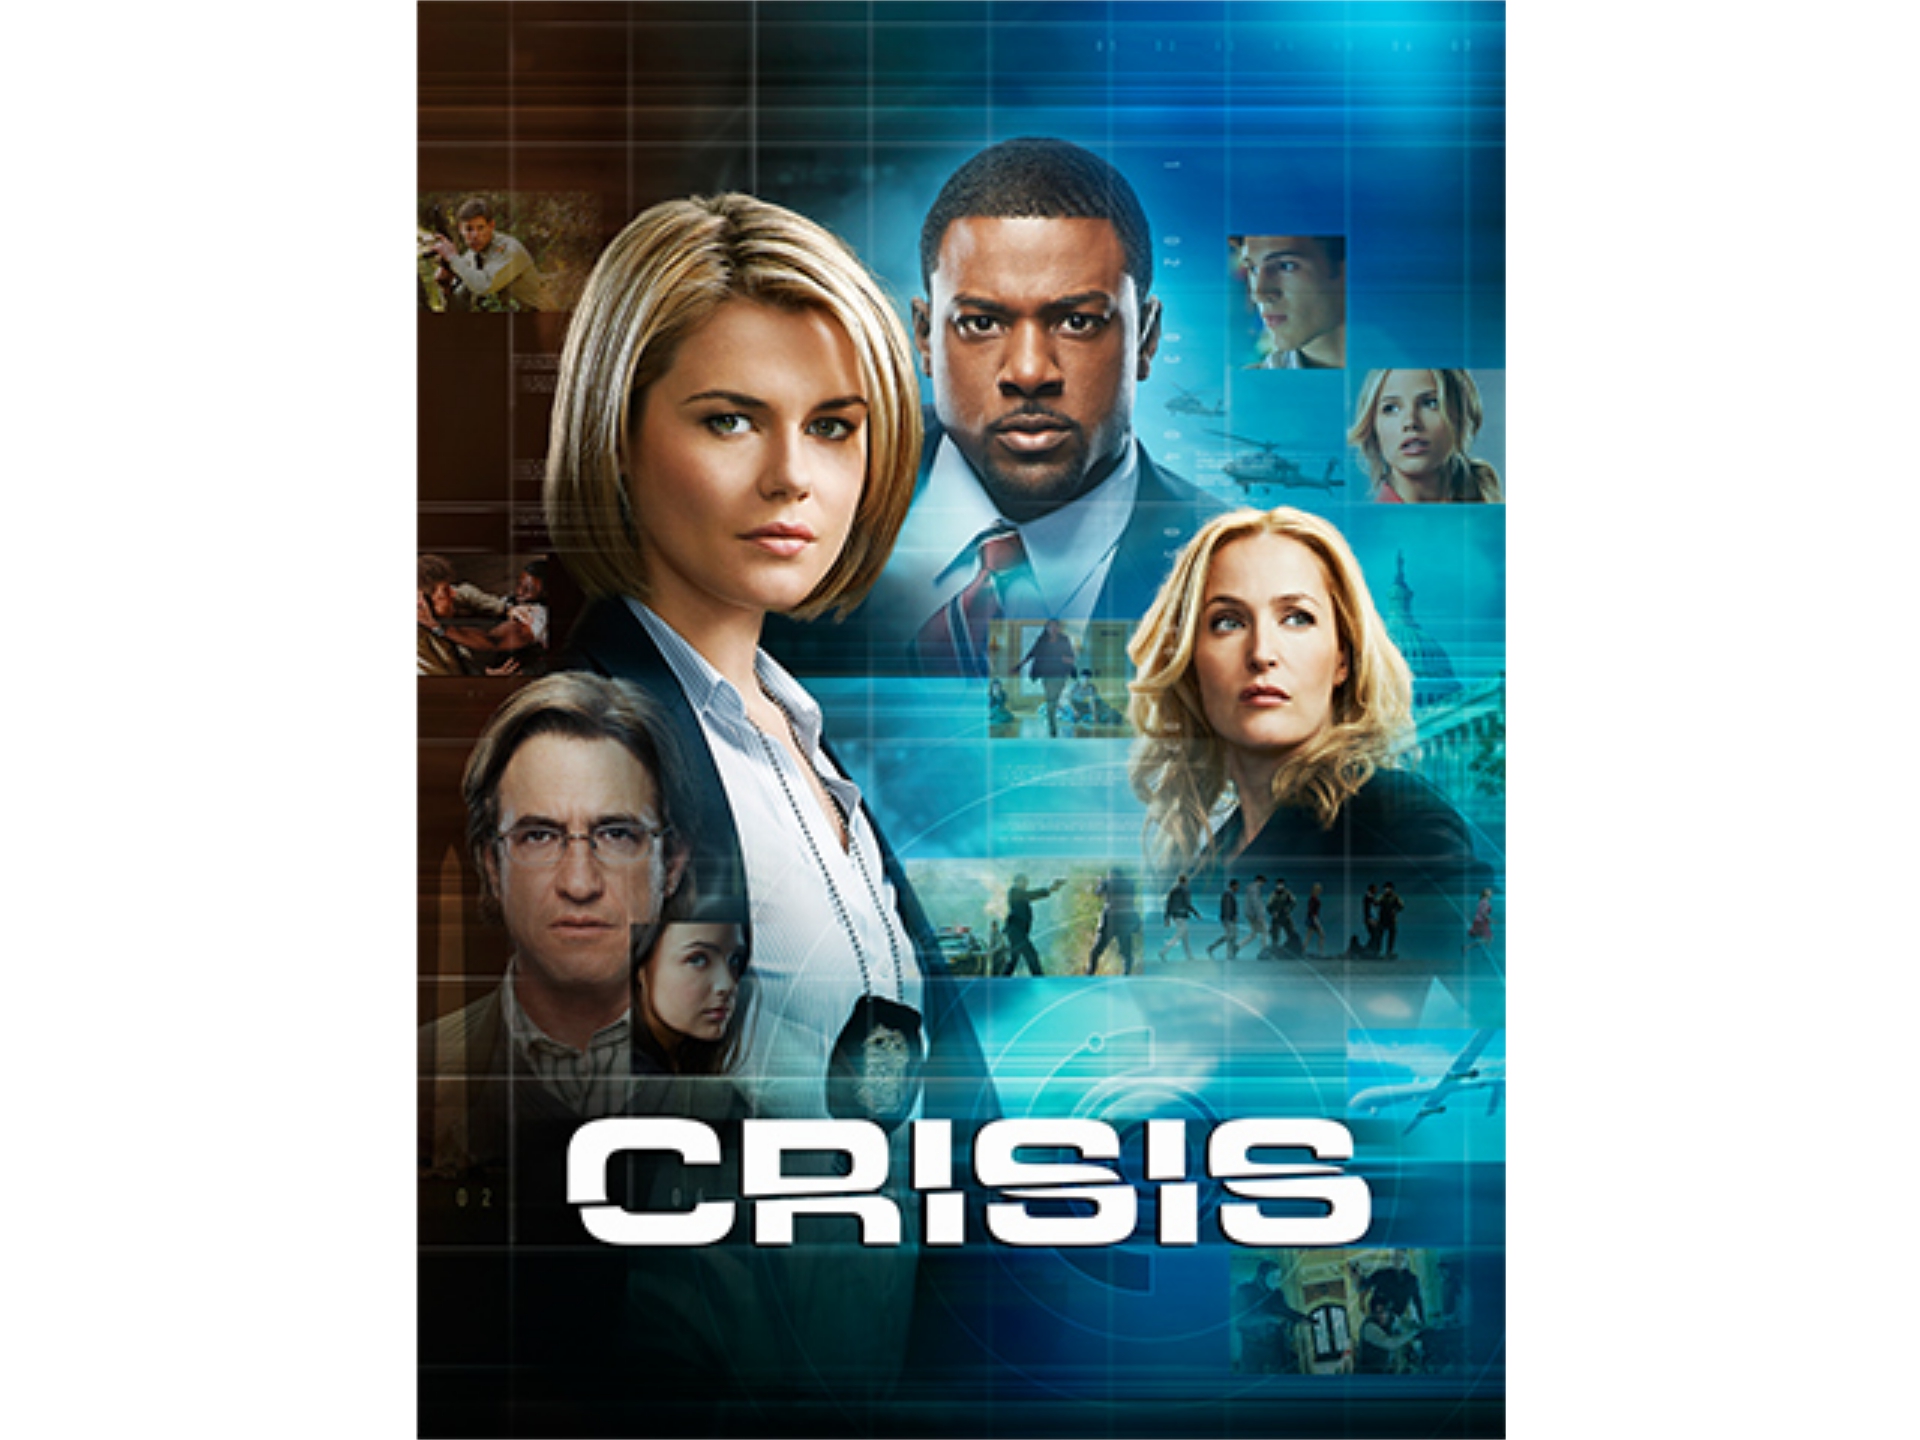 Crisis 完全犯罪のシナリオ シーズン1 第1話 第13話のまとめフル動画 初月無料 動画配信サービスのビデオマーケット